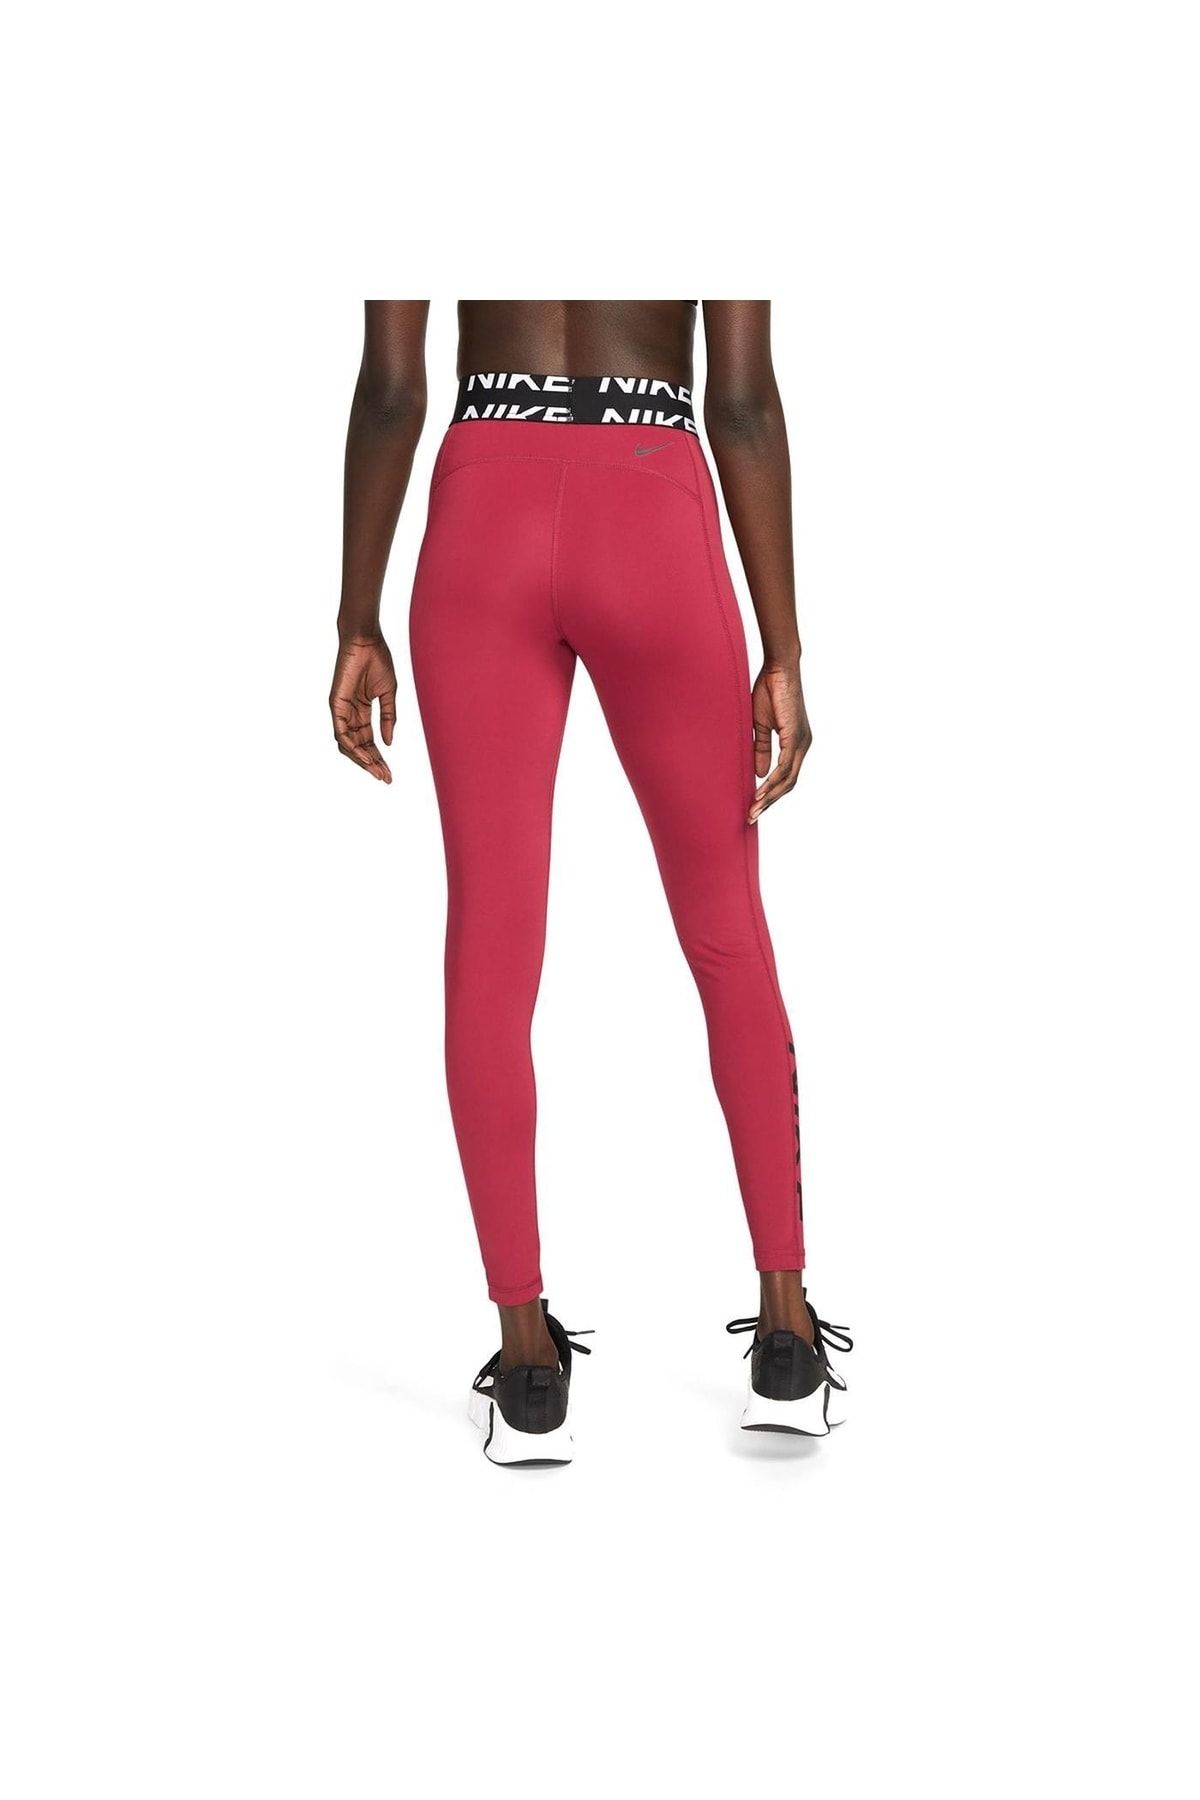 Nike, Pants & Jumpsuits, Nike Pro Hyperwarm Multi Color Legging Size Small